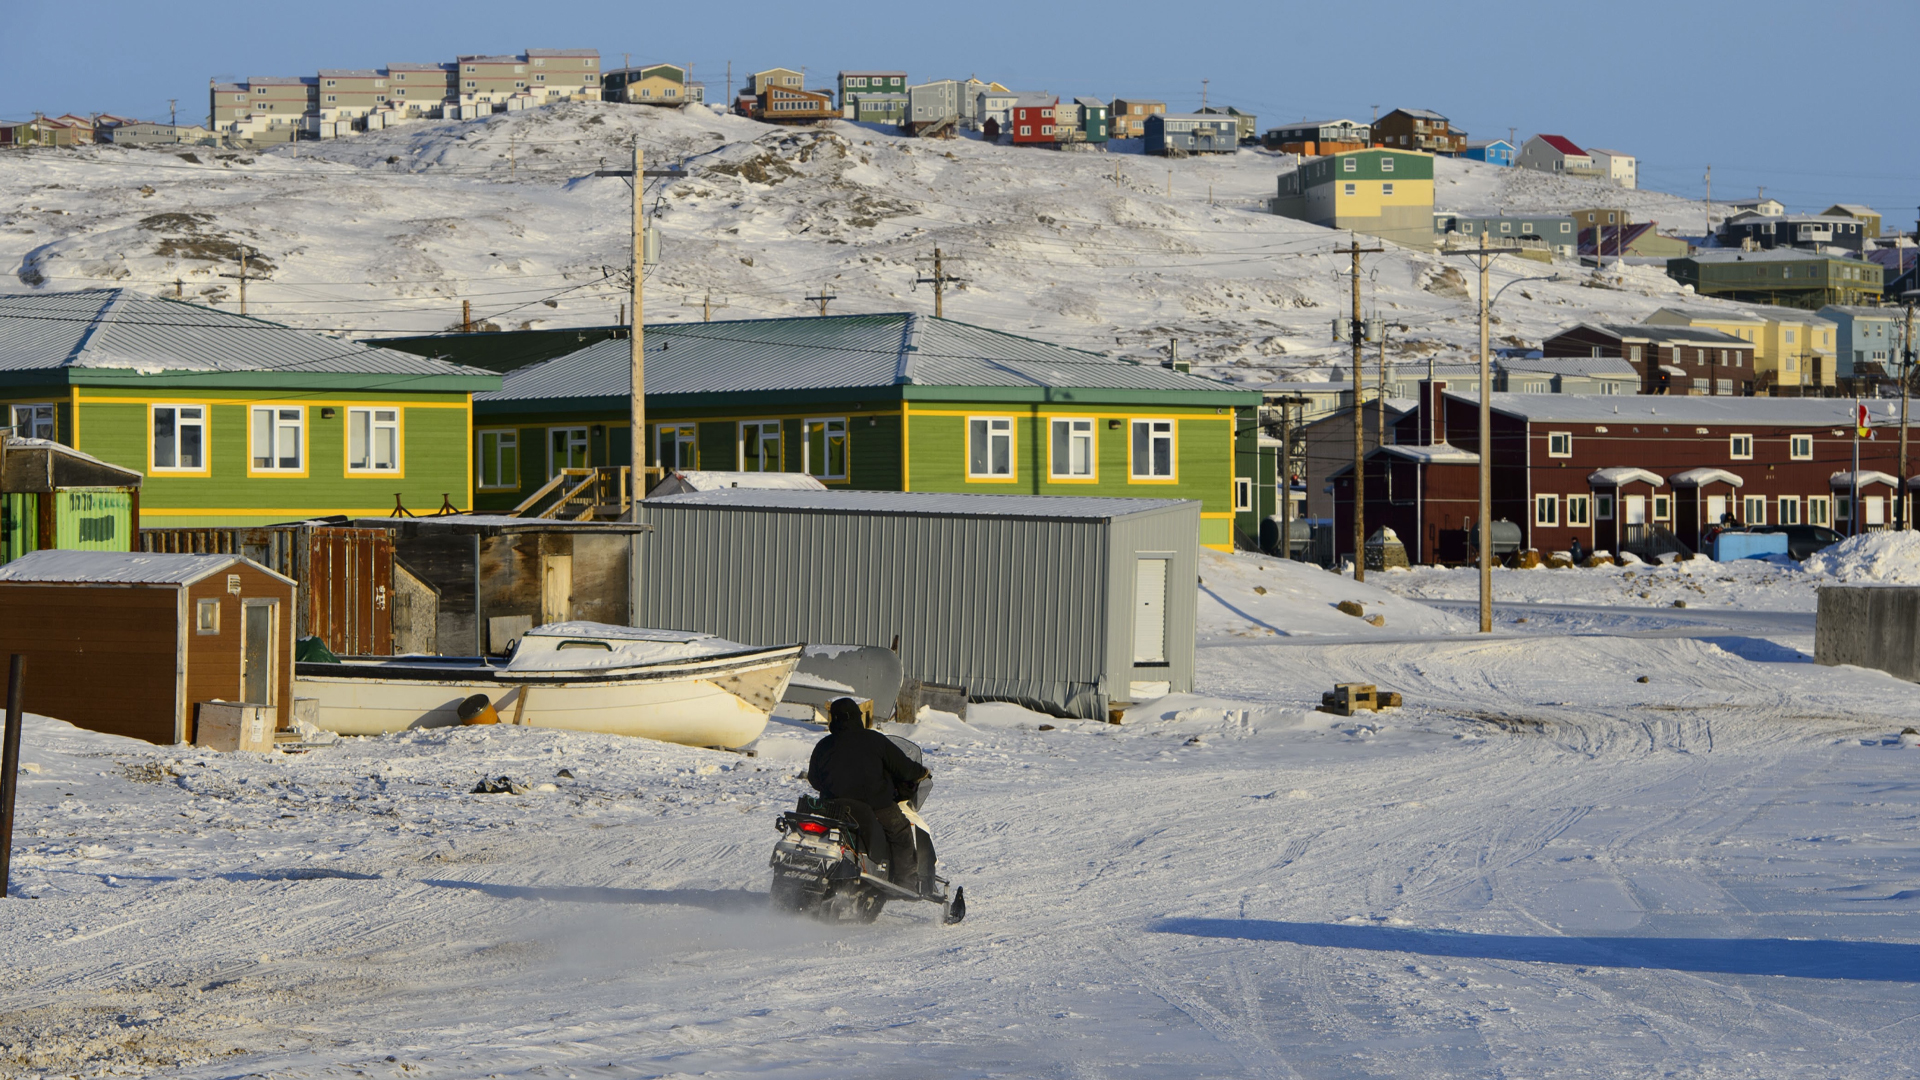 inuit way of life